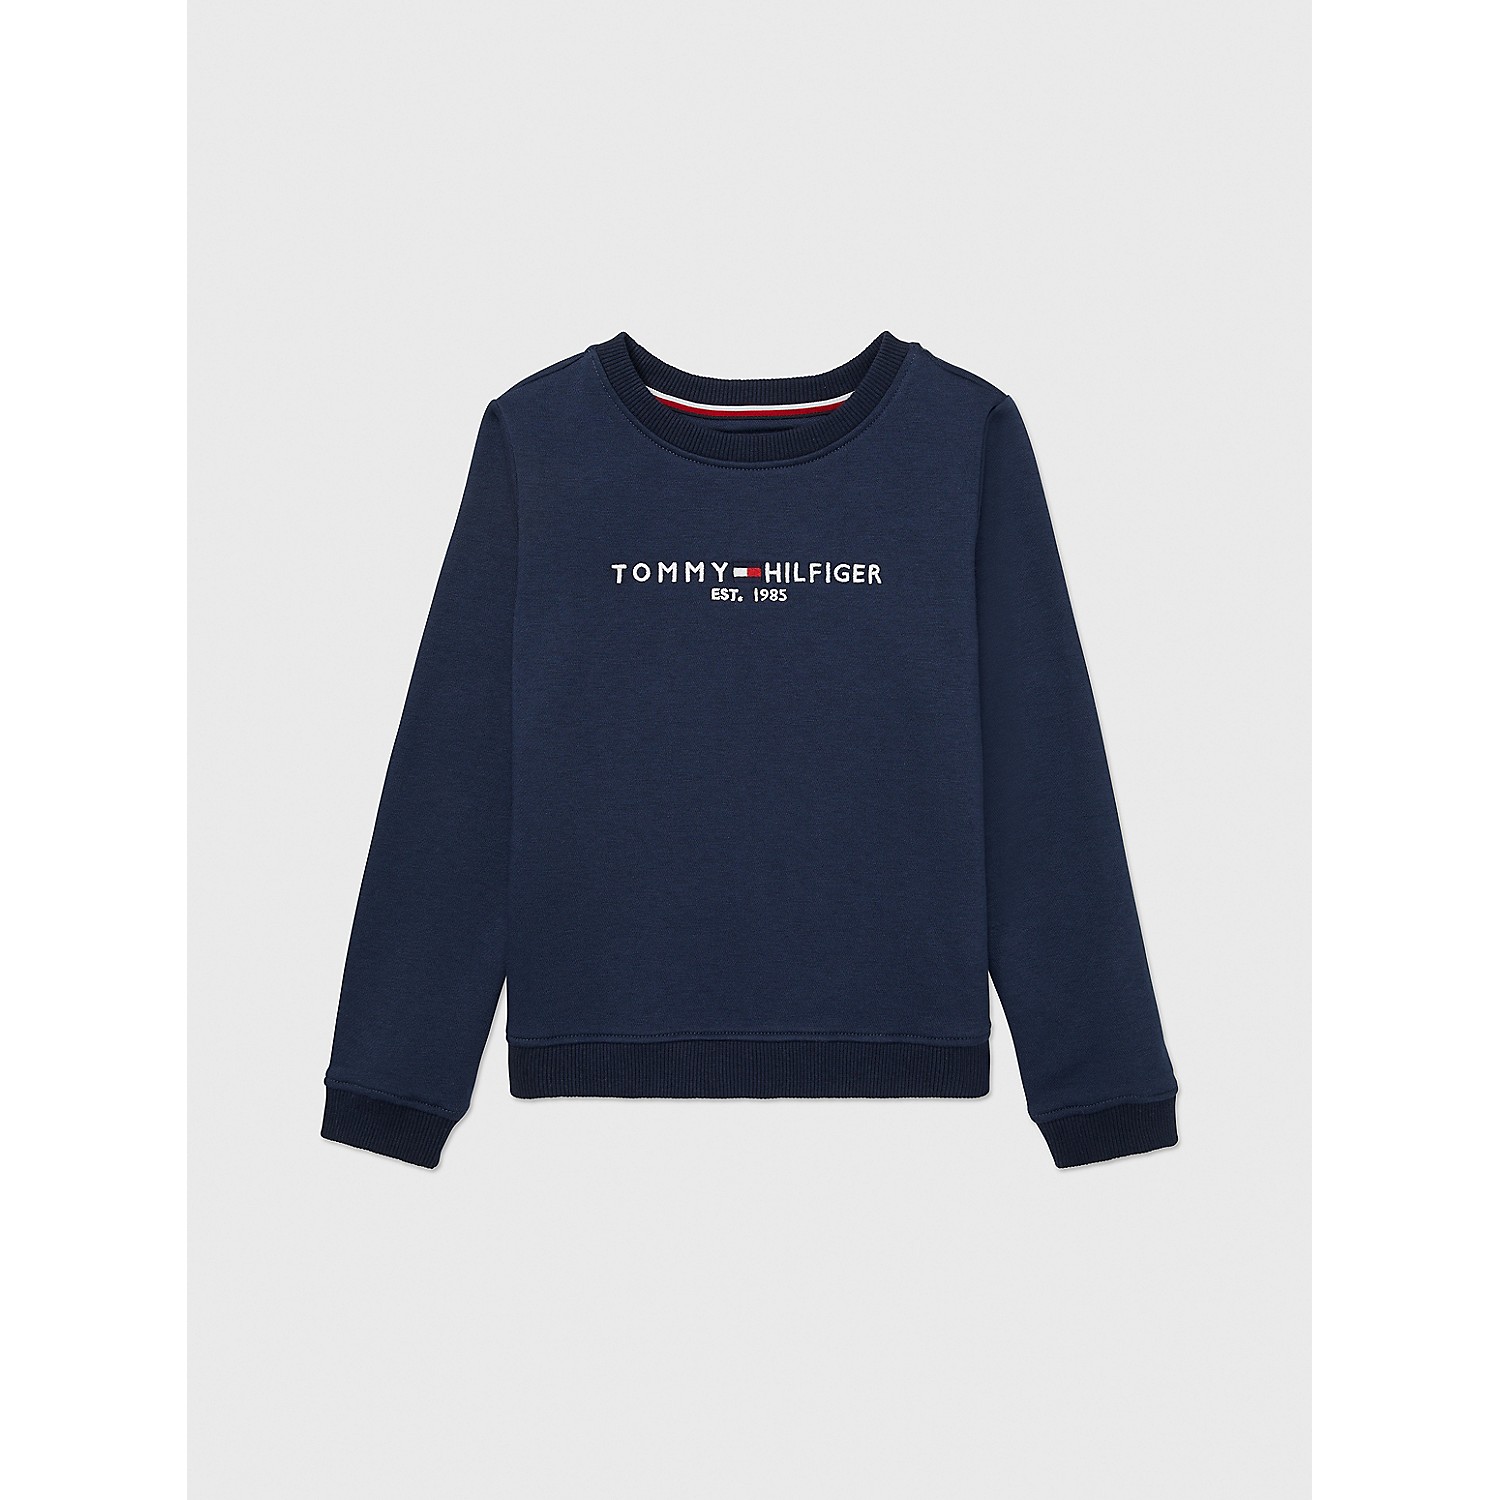 TOMMY HILFIGER Kids Embroidered Tommy Logo Sweatshirt